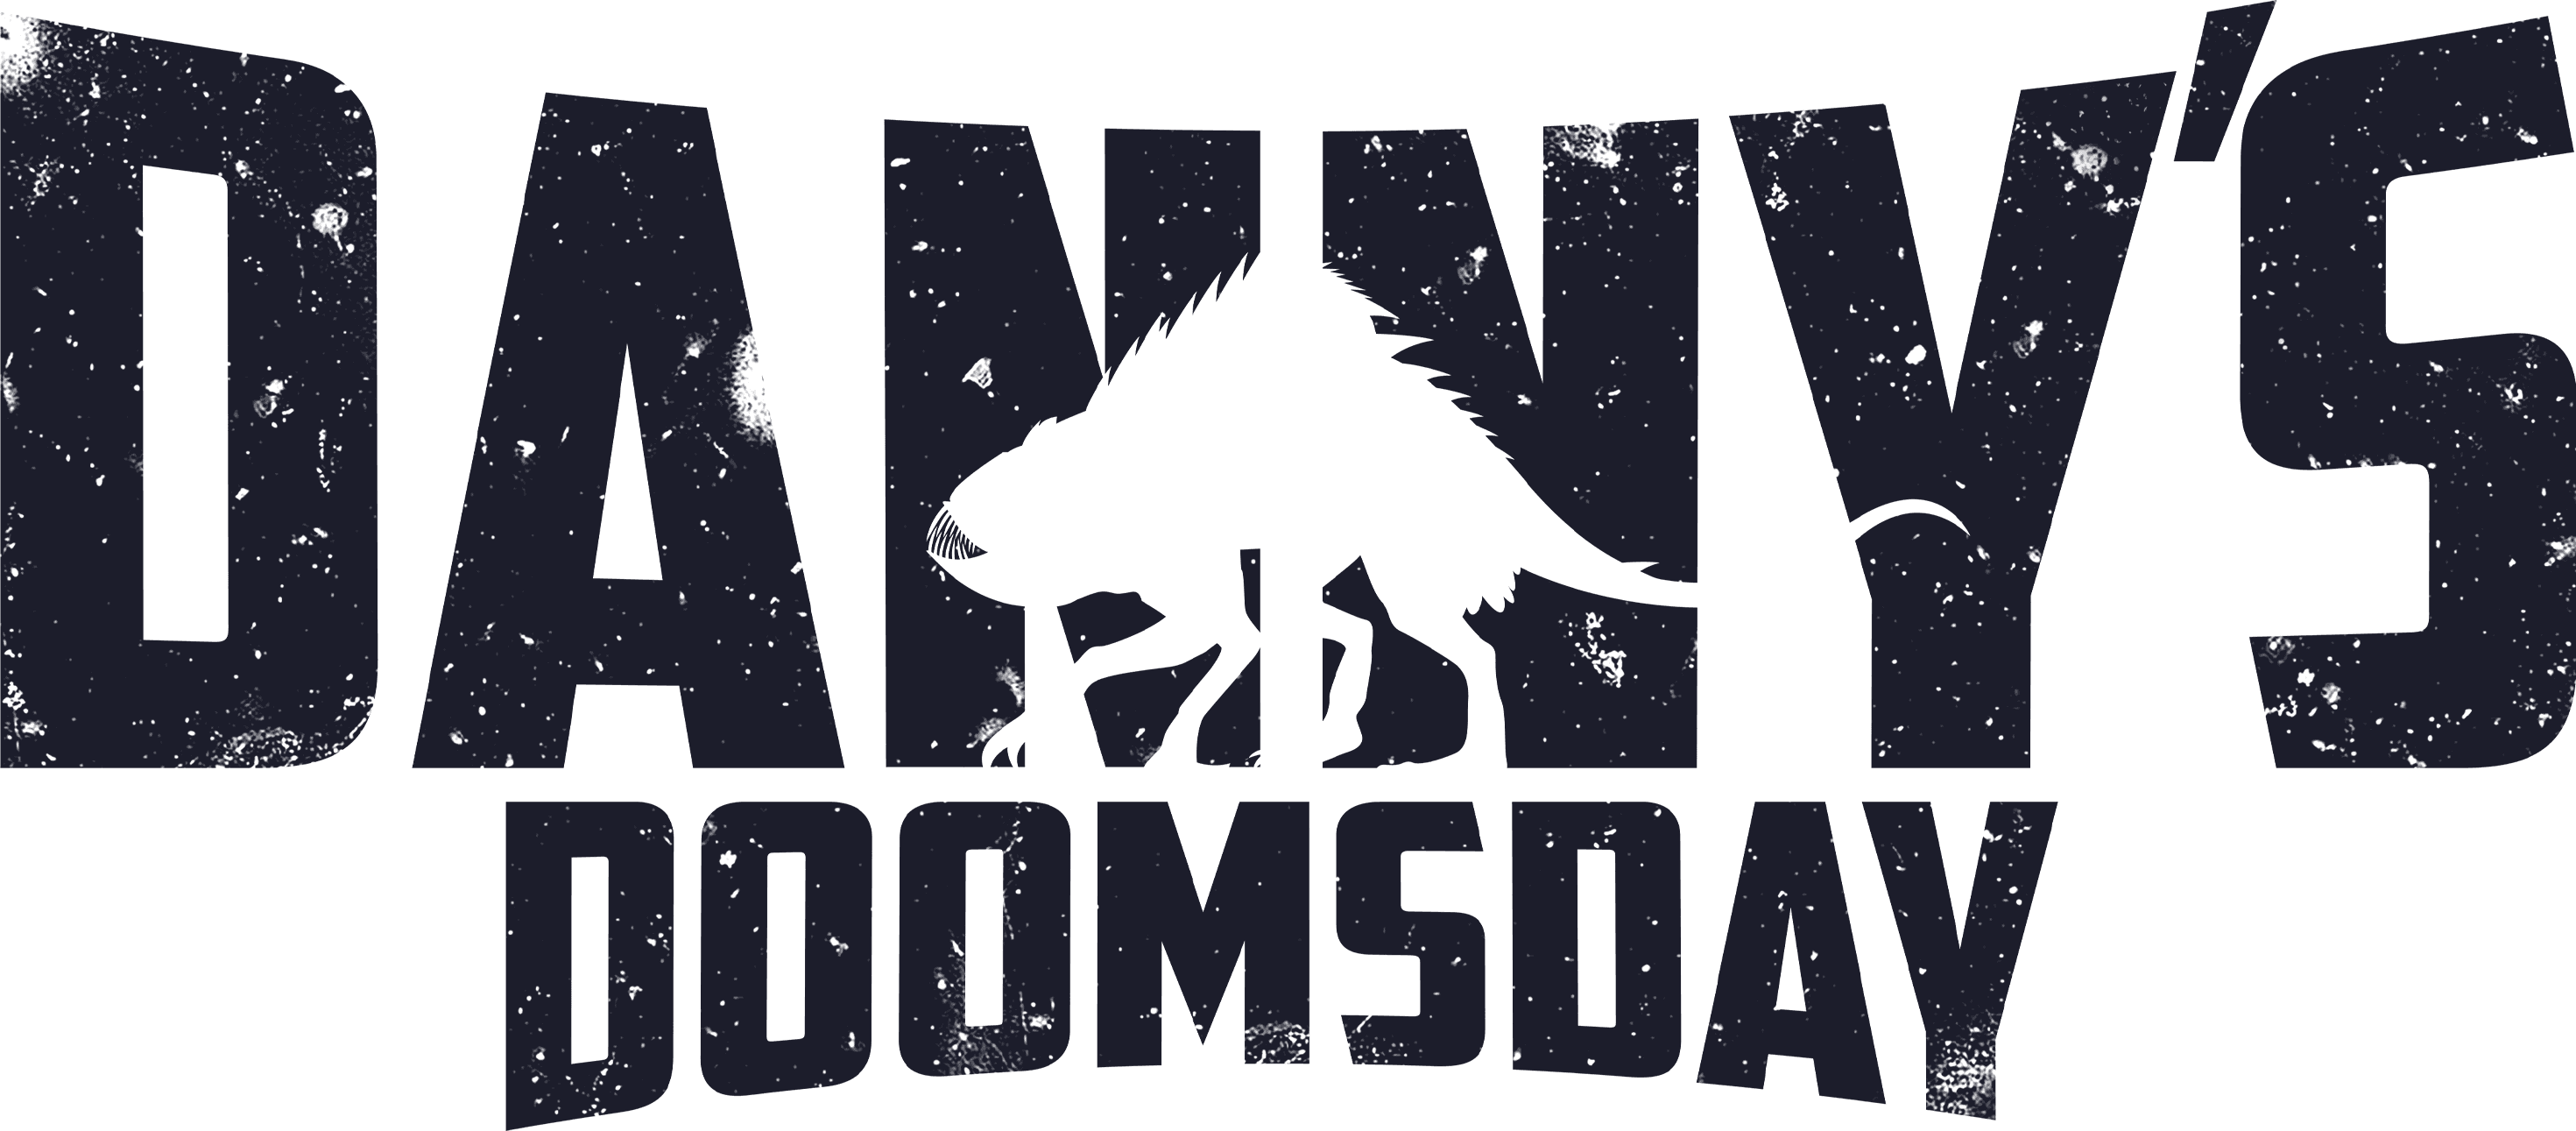 Danny's Doomsday logo